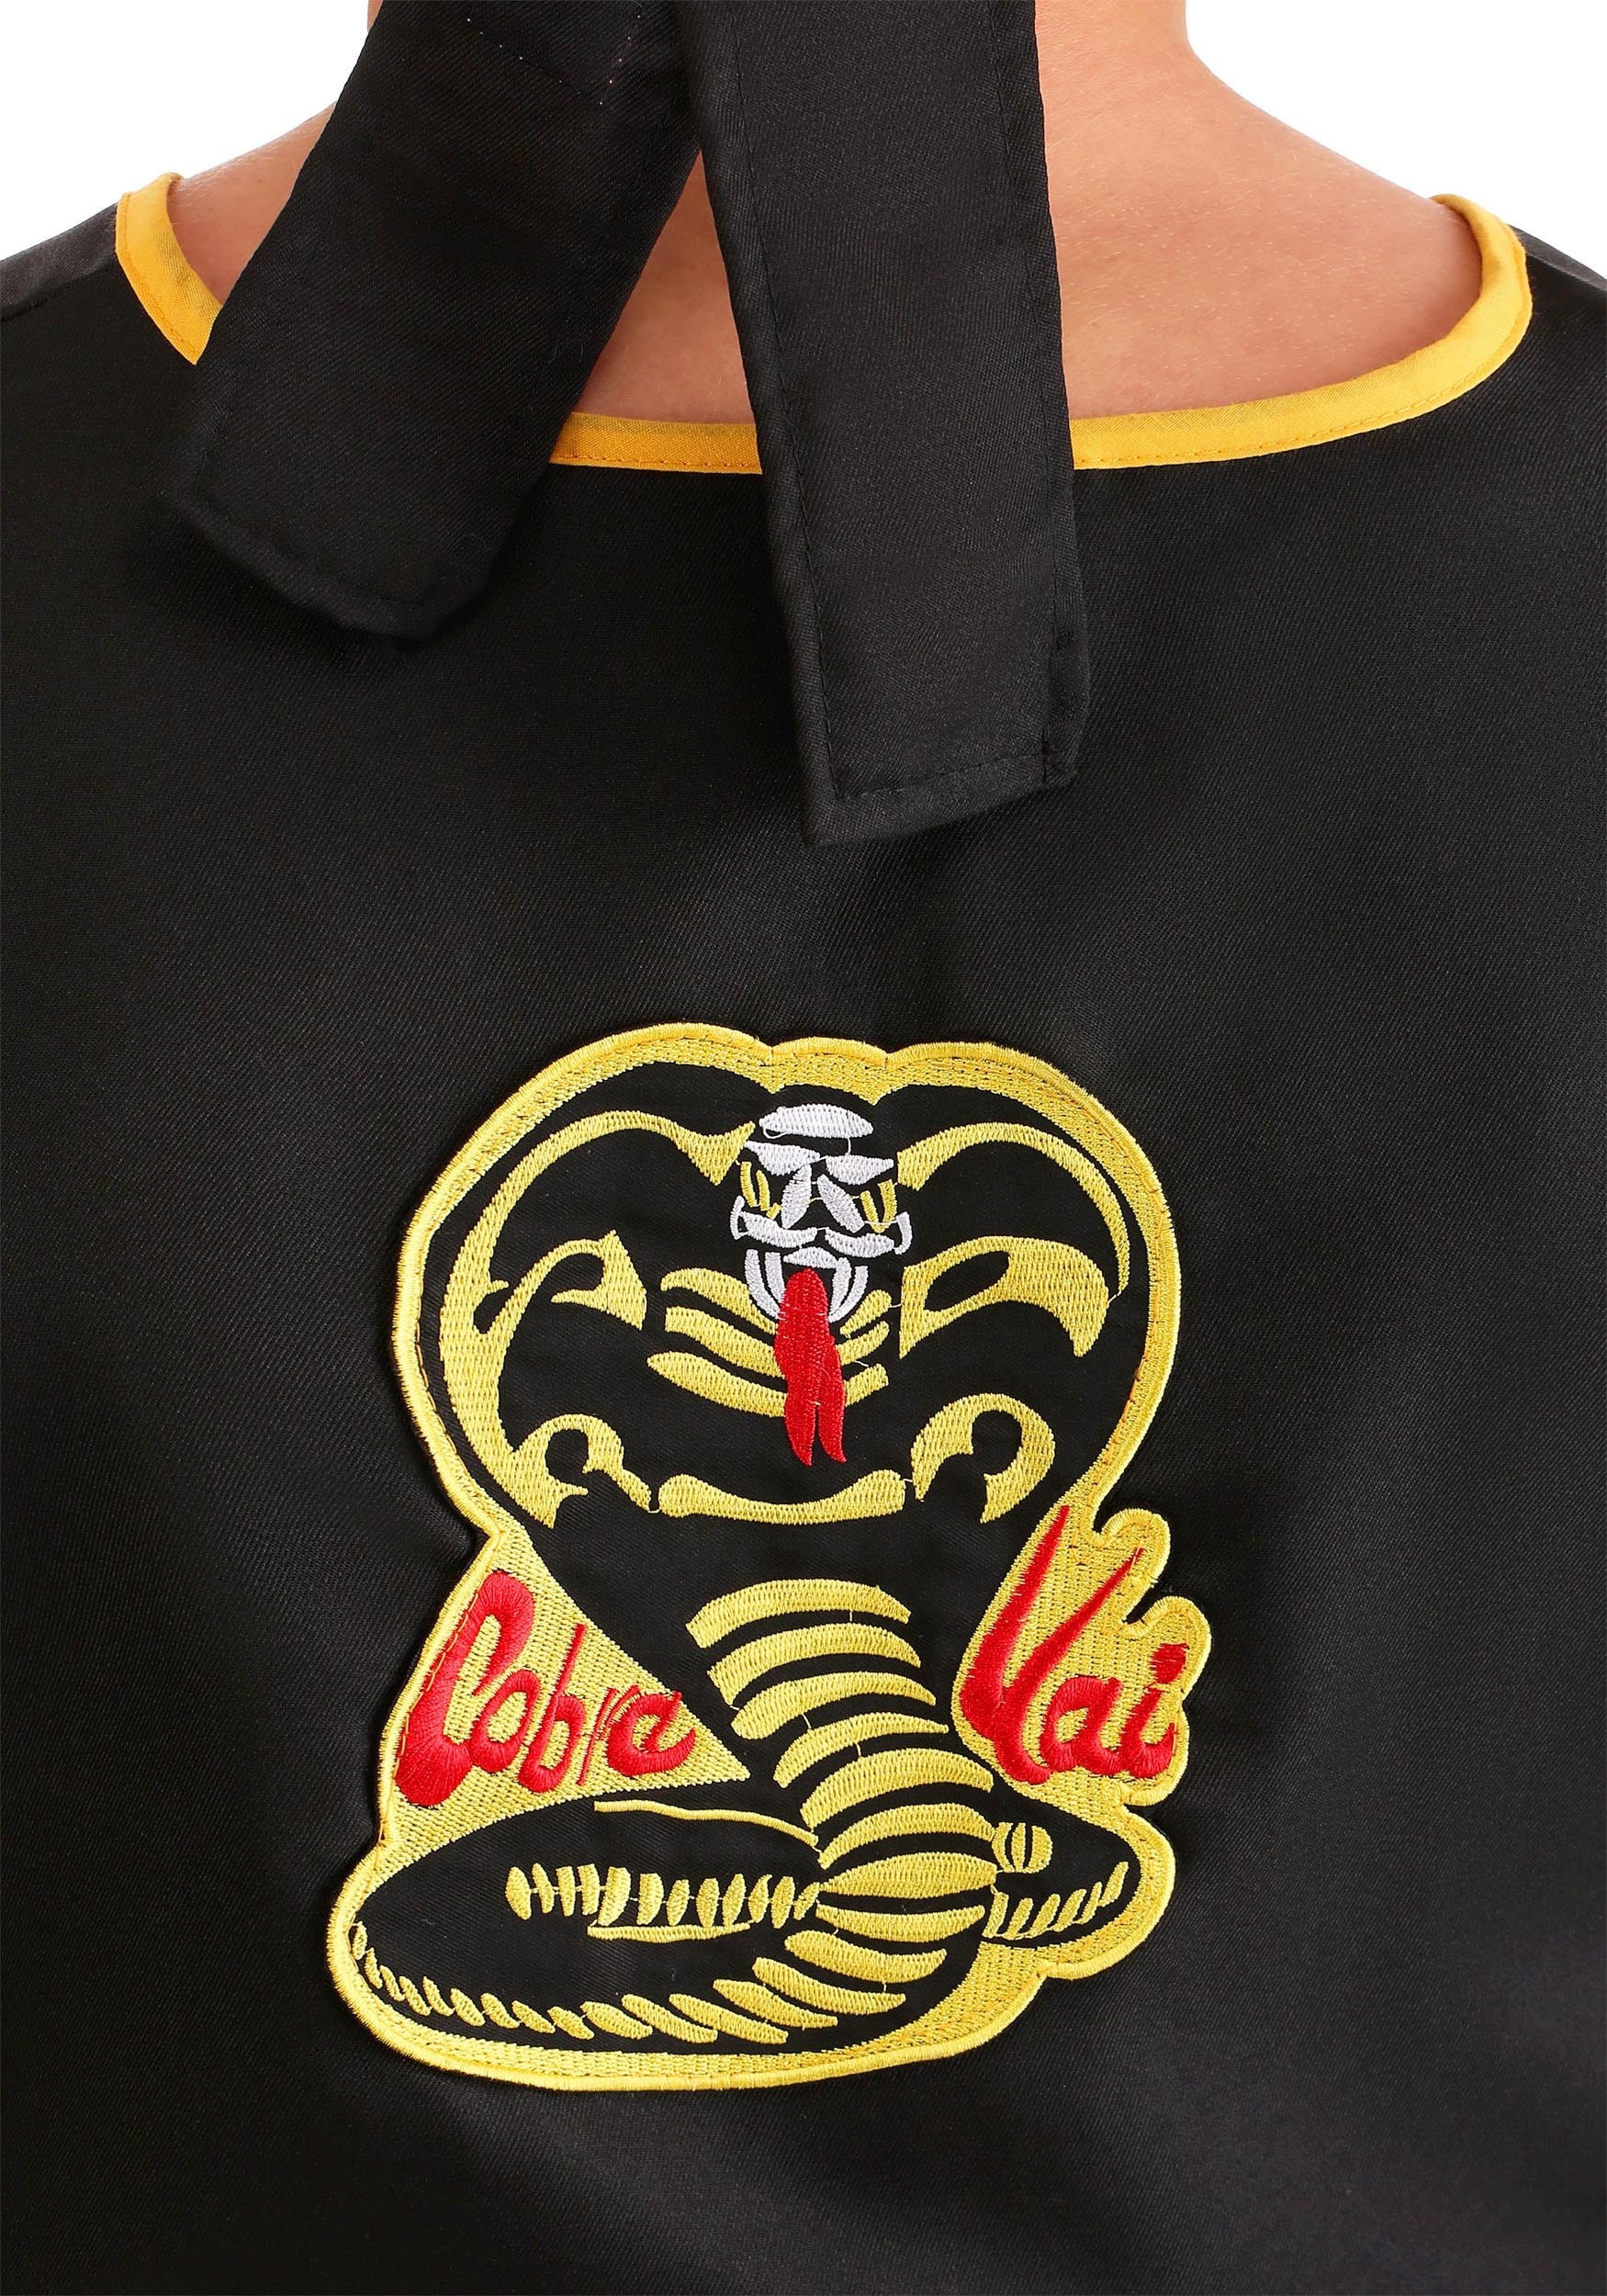 Men's Karate Kid Cobra Kai Costume